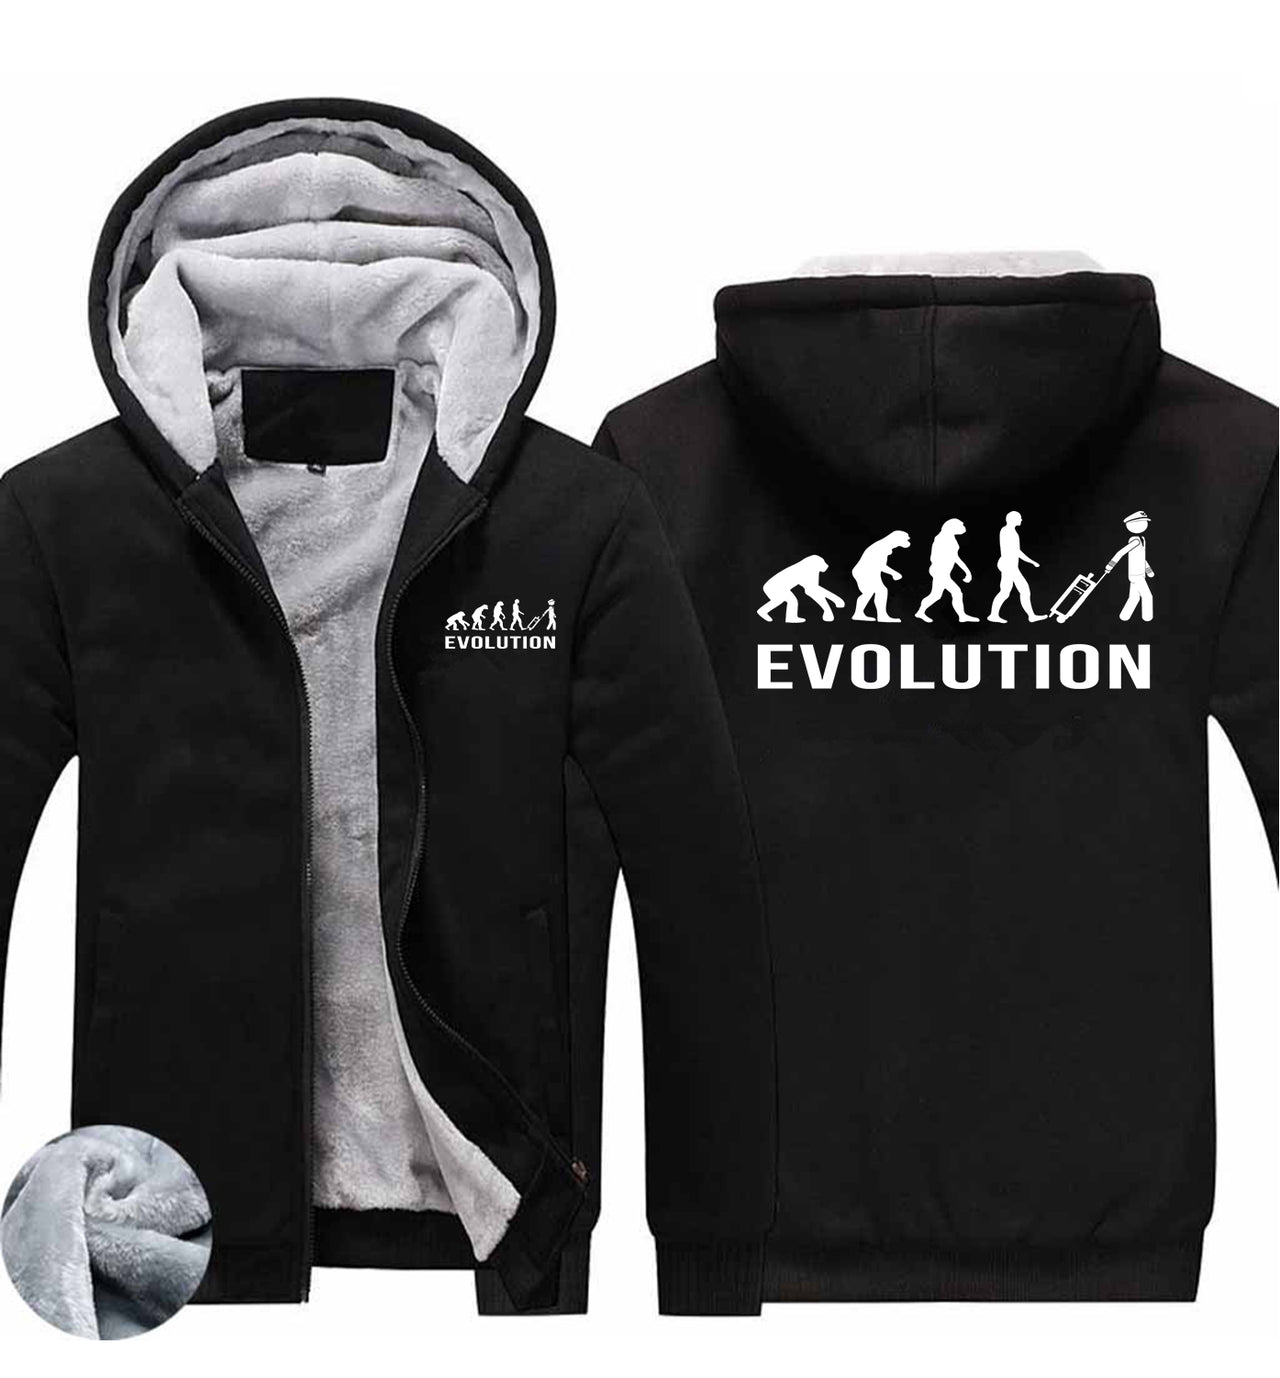 Pilot Evolution Designed Zipped Sweatshirts